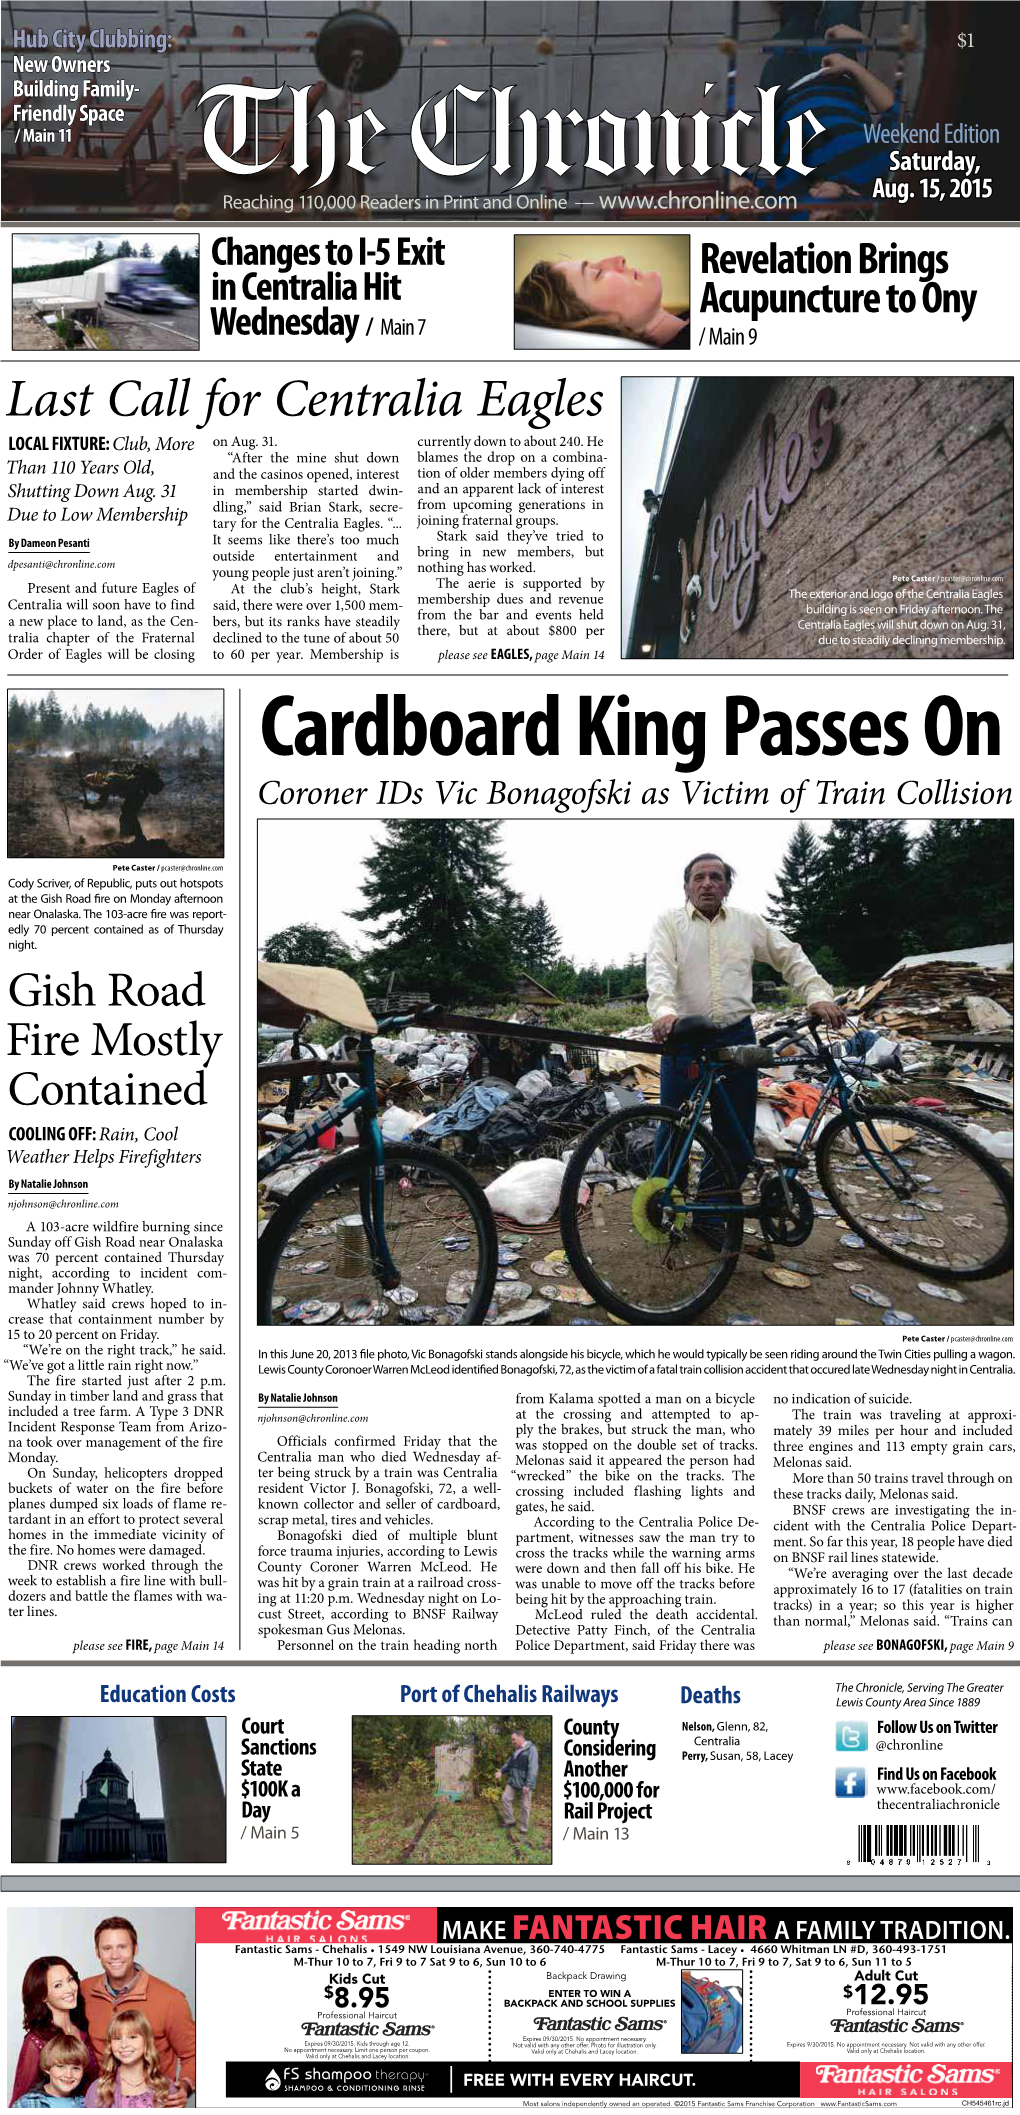 Cardboard King Passes on Coroner Ids Vic Bonagofski As Victim of Train Collision